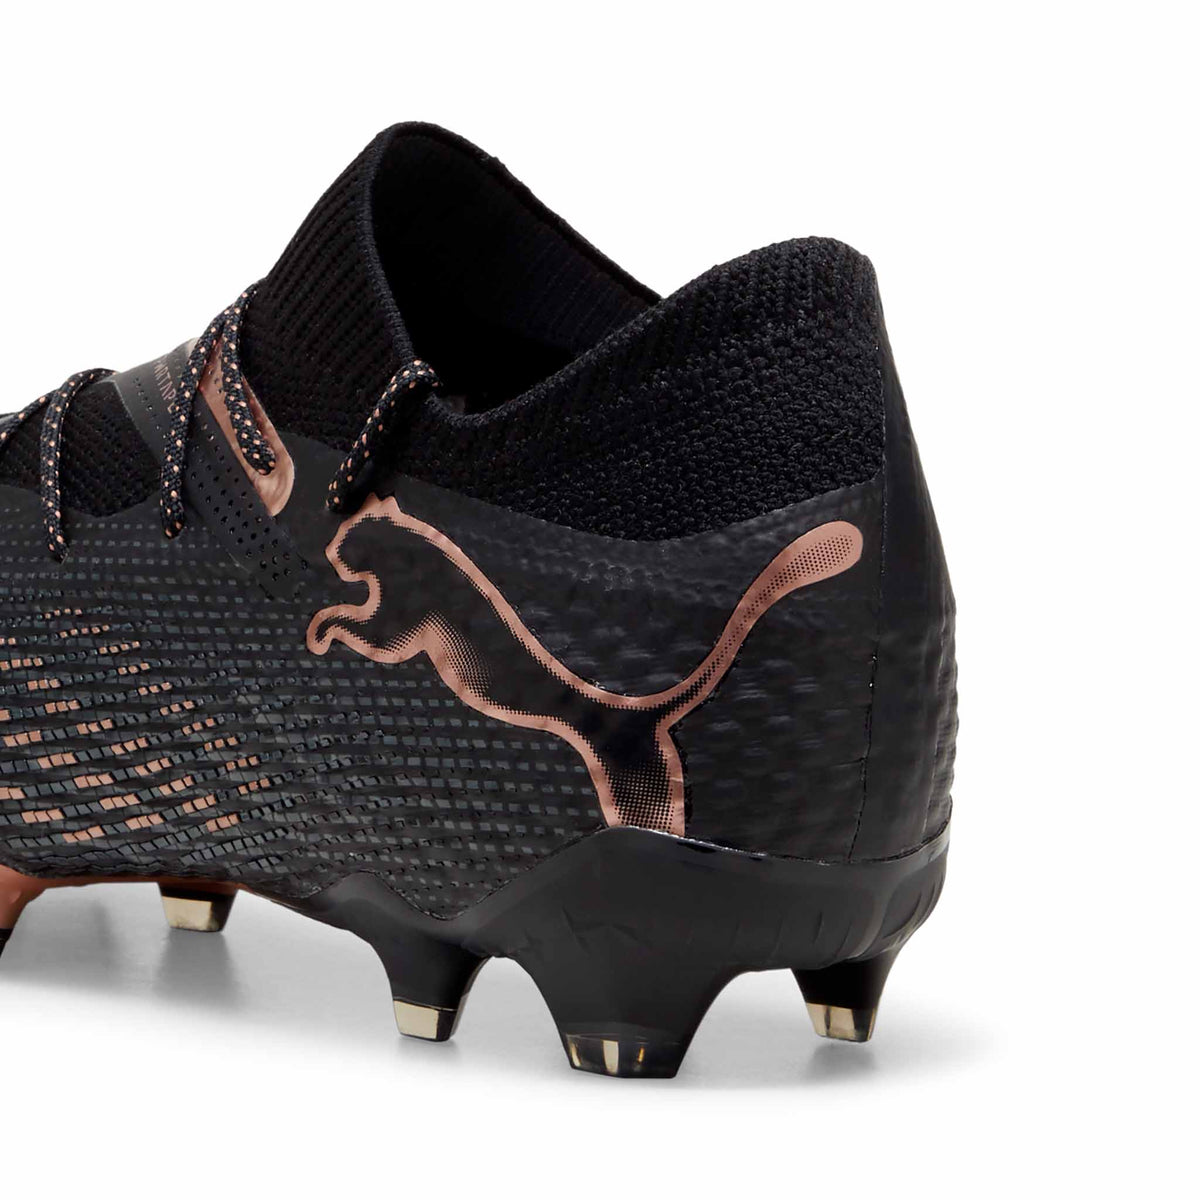 Puma Future 7 Ultimate FG/AG chaussures de soccer à crampons - Puma Black / Copper Rose